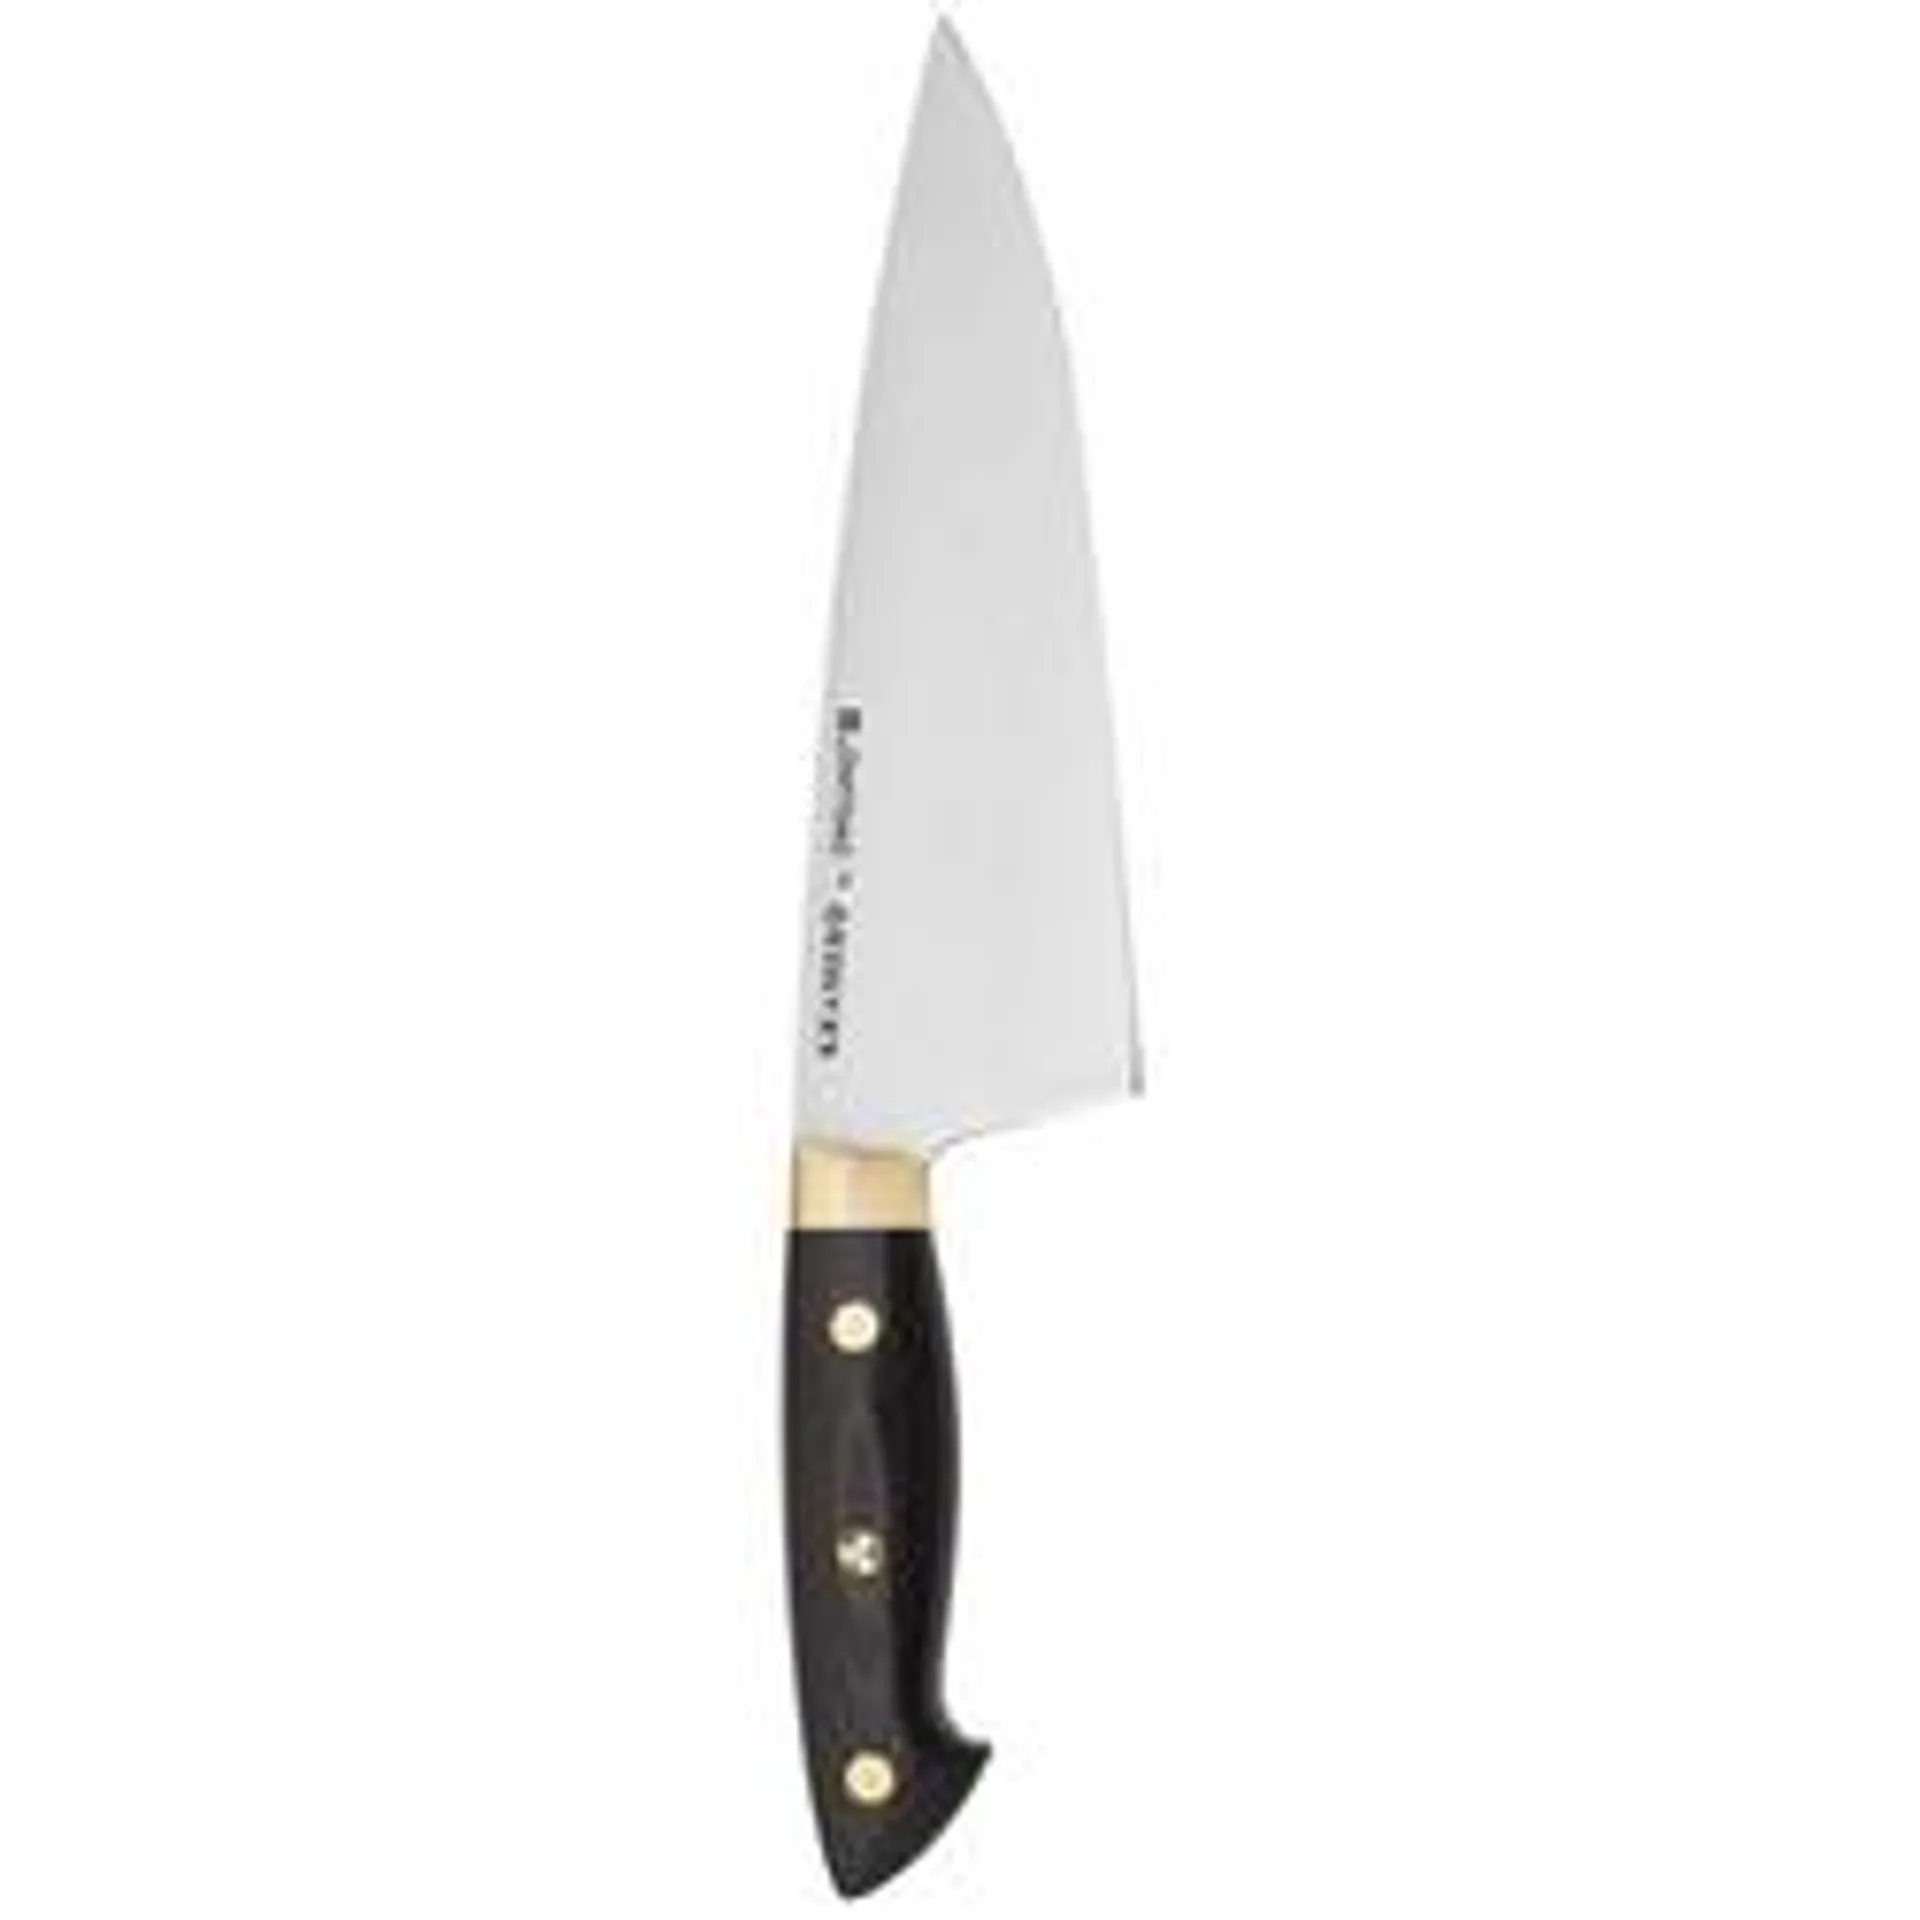 Bob Kramer 8" Carbon Steel Chef’s Knife by Zwilling J.A. Henckels